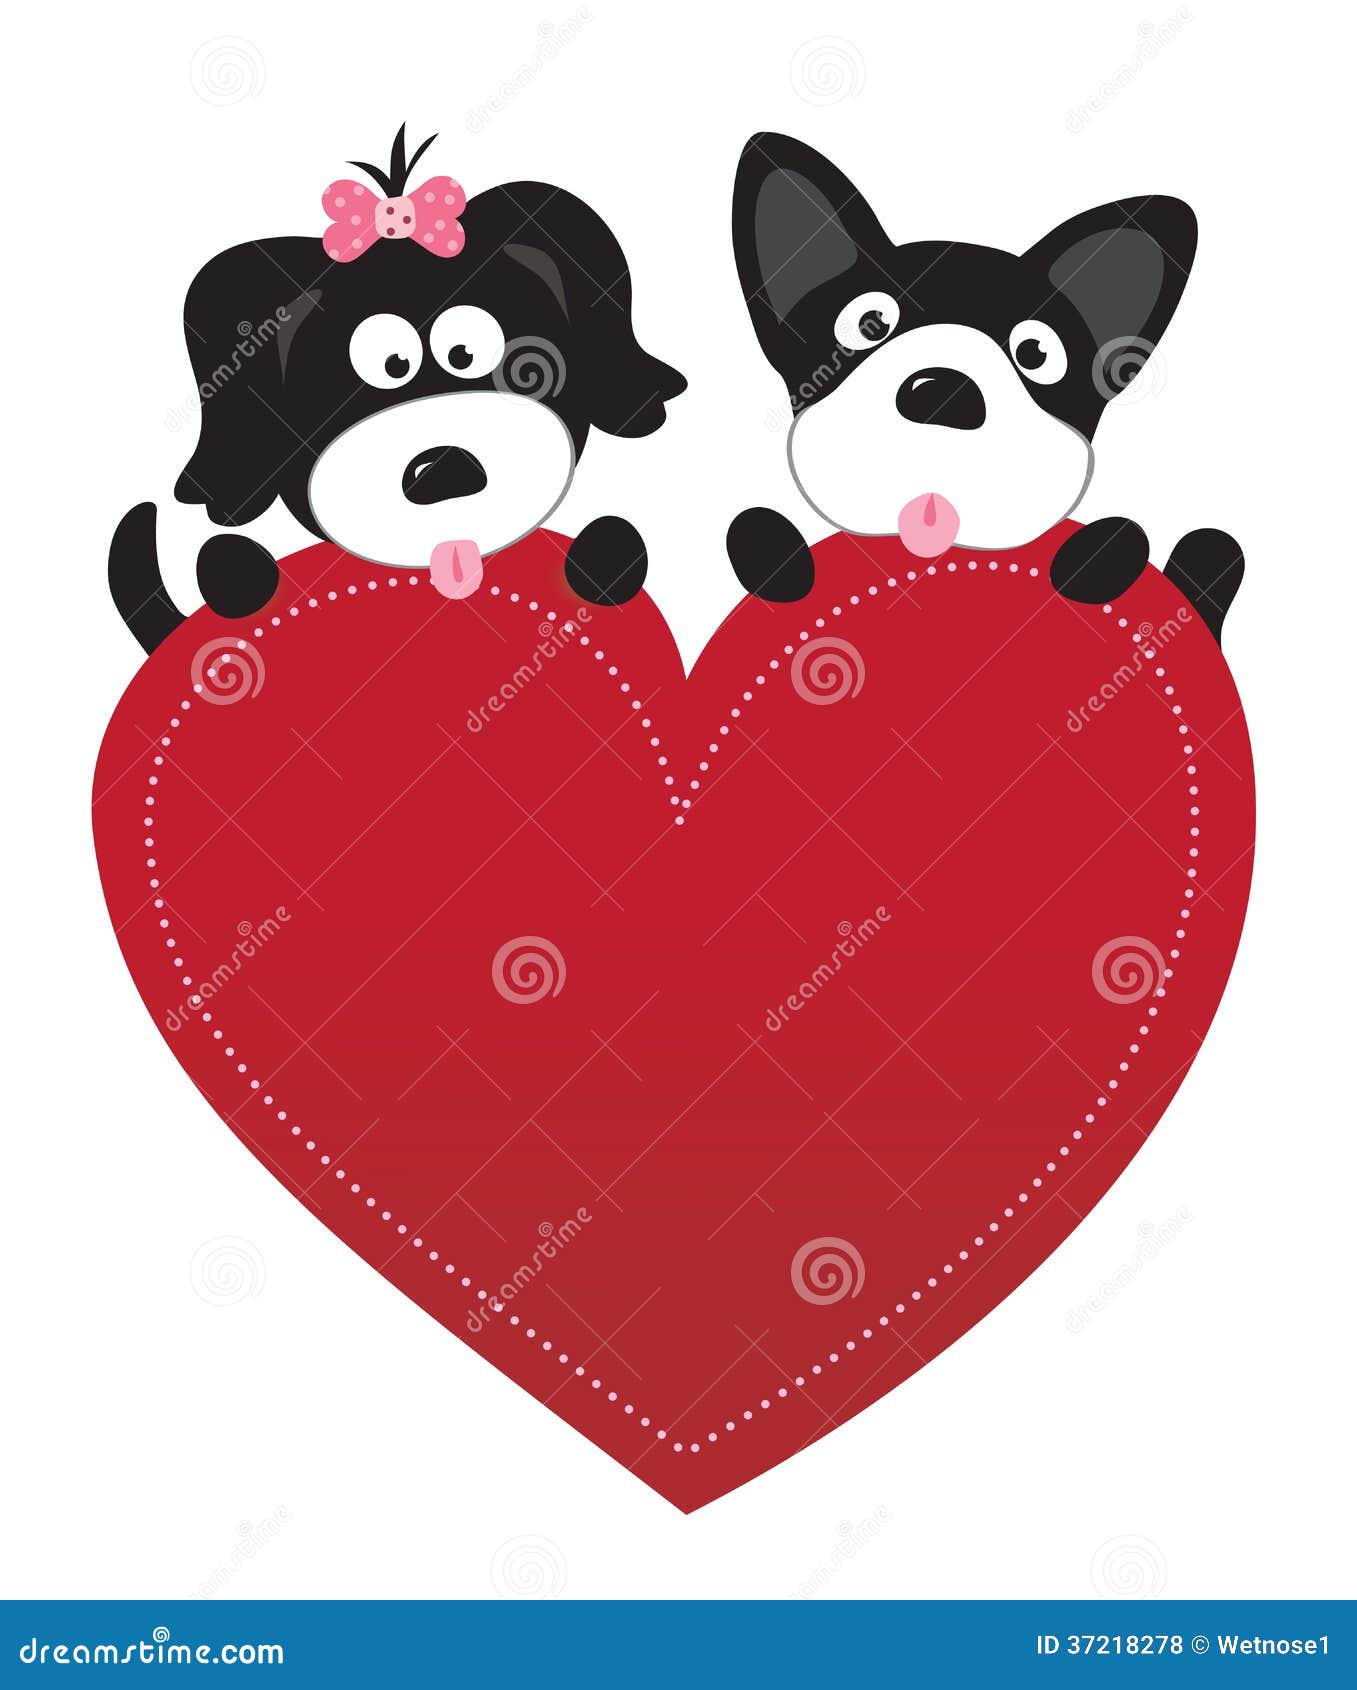 free dog valentine clipart - photo #38